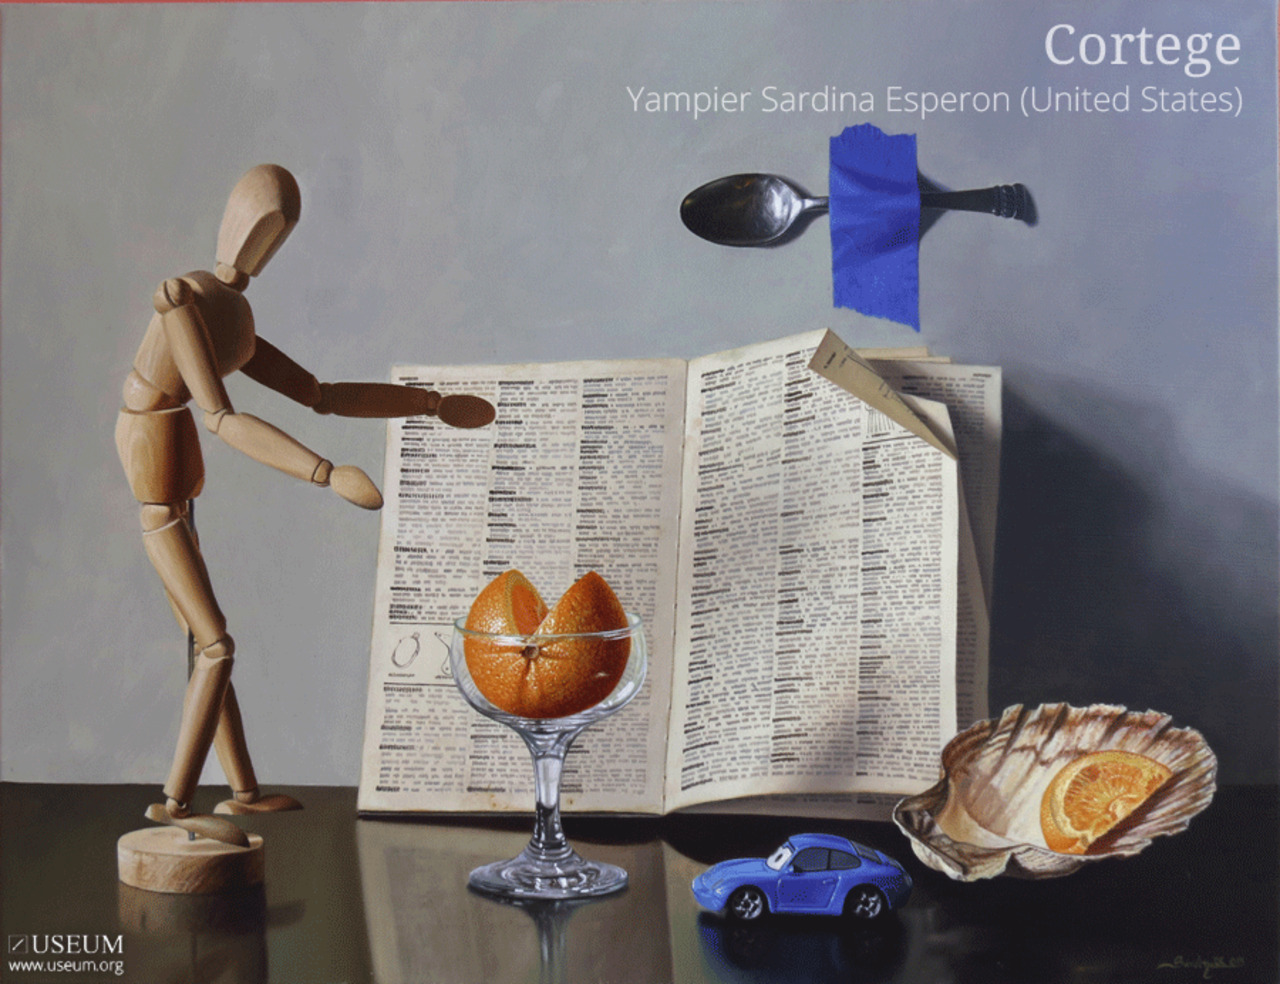 #Painting by Yampier Sardina Esperon. Visit his #USEUM exhibition: http://goo.gl/Jt6wqC  #art #StillLife #twitart http://t.co/iQqpVPWiBE